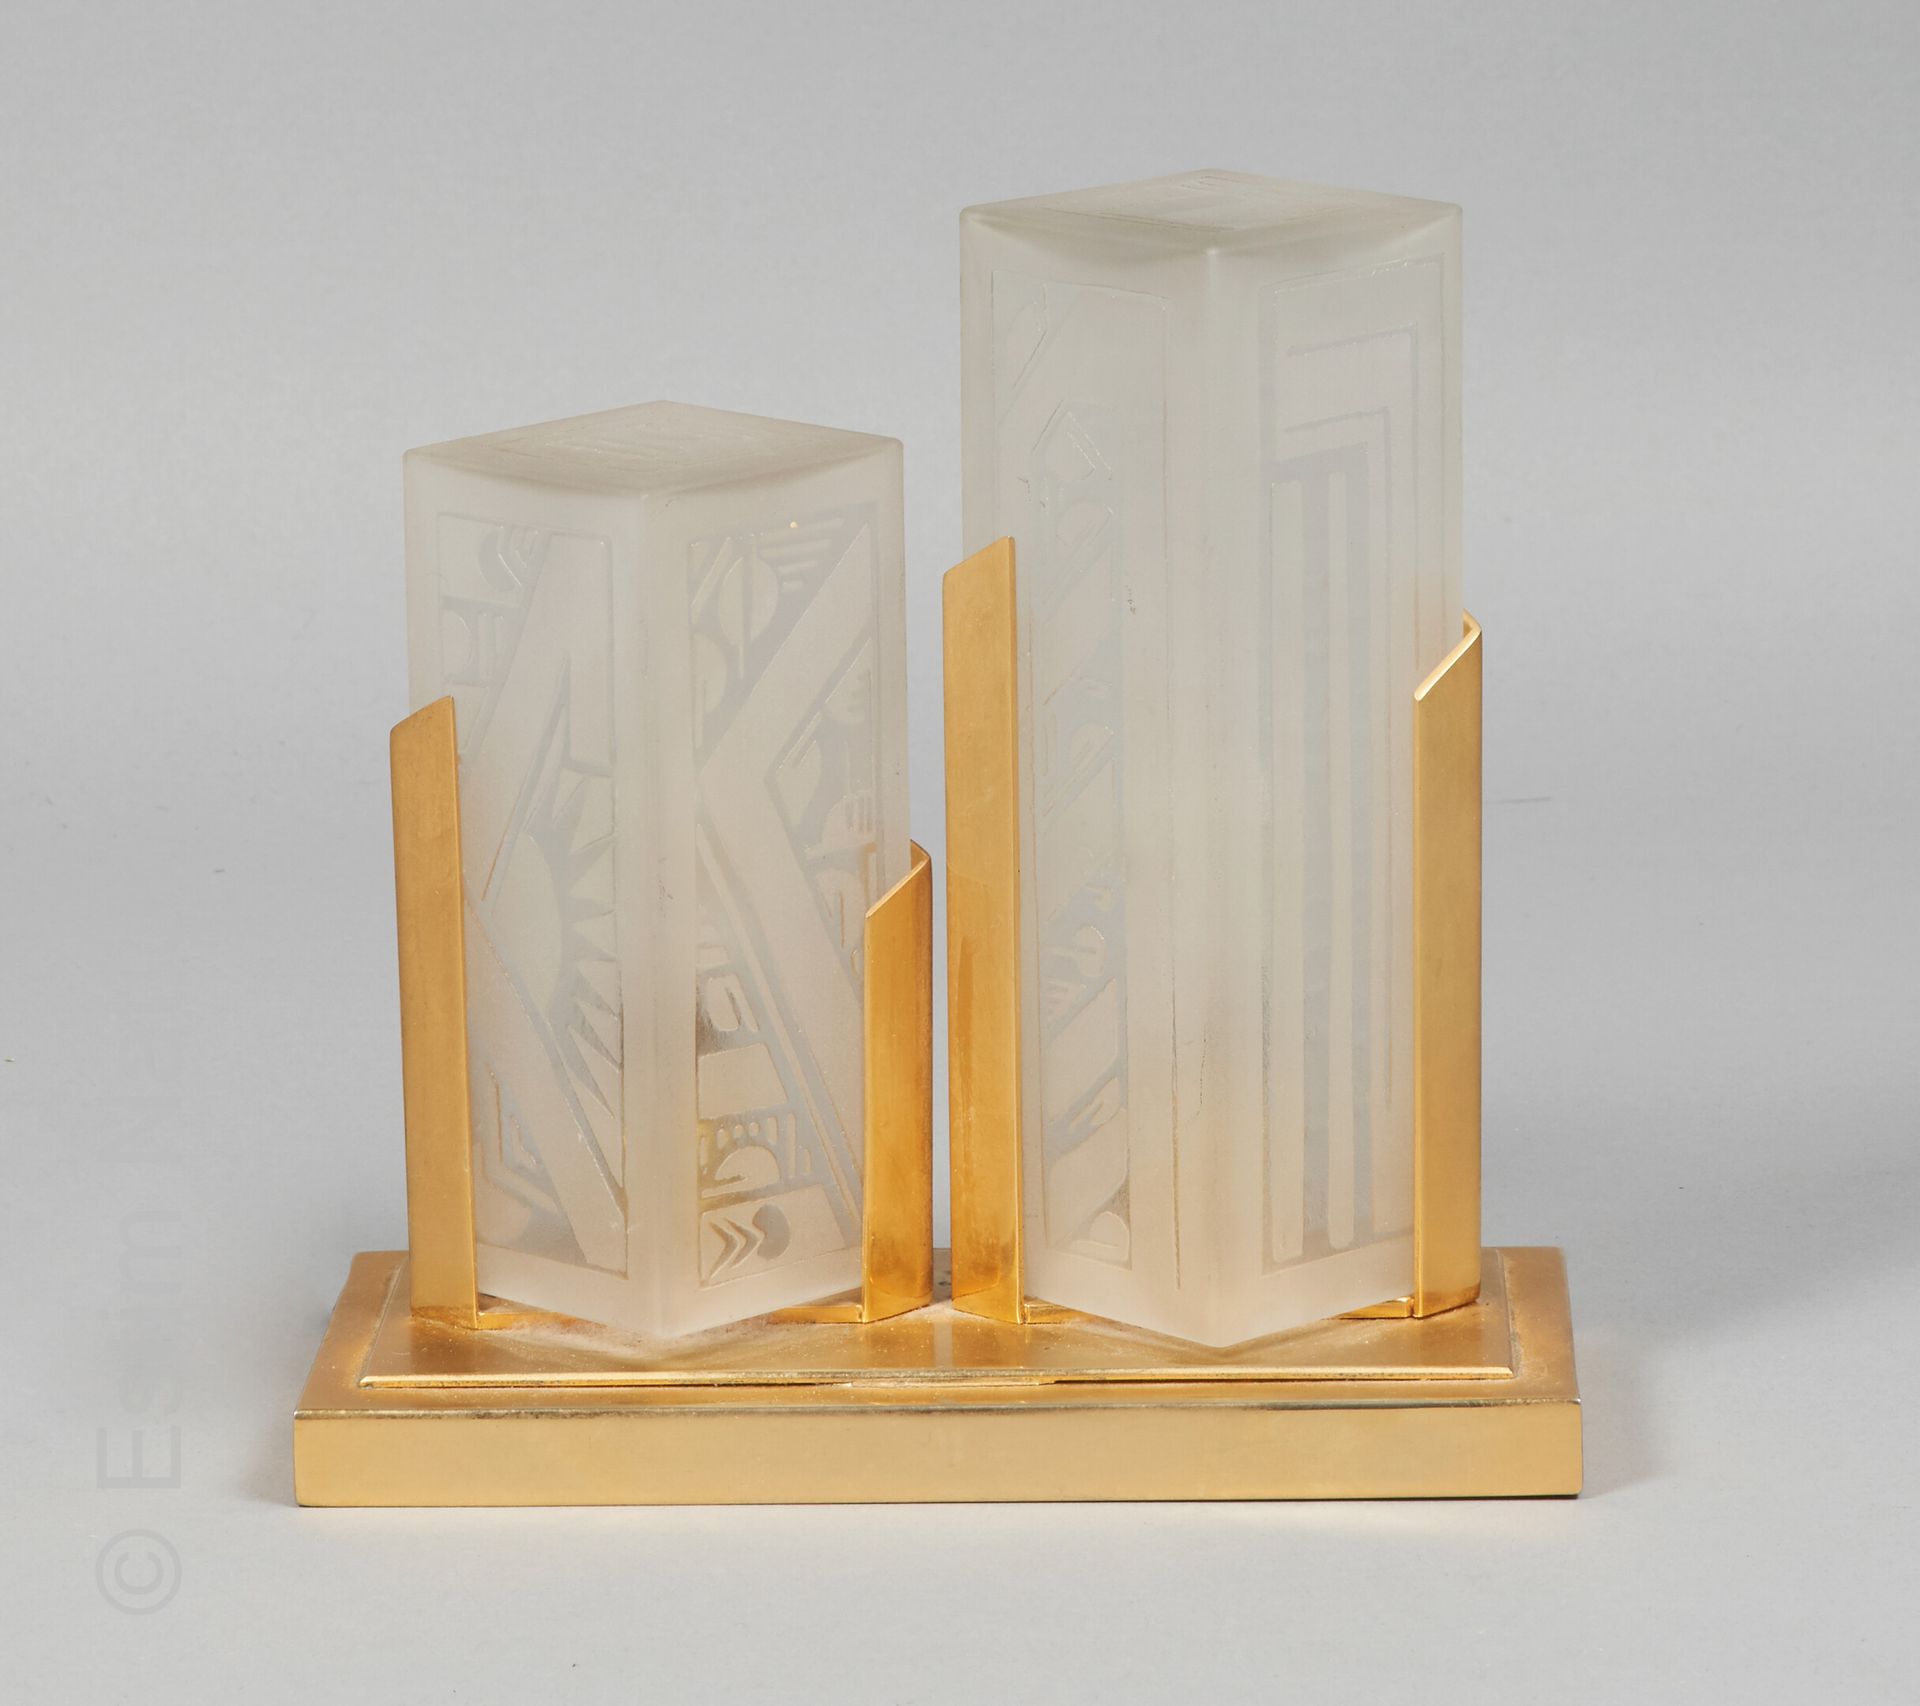 DEVEAU 带灯的电灯，镀金的金属底座和喷砂的几何装饰玻璃

在玻璃上签名

1930年左右的装饰艺术时期

高度：19厘米